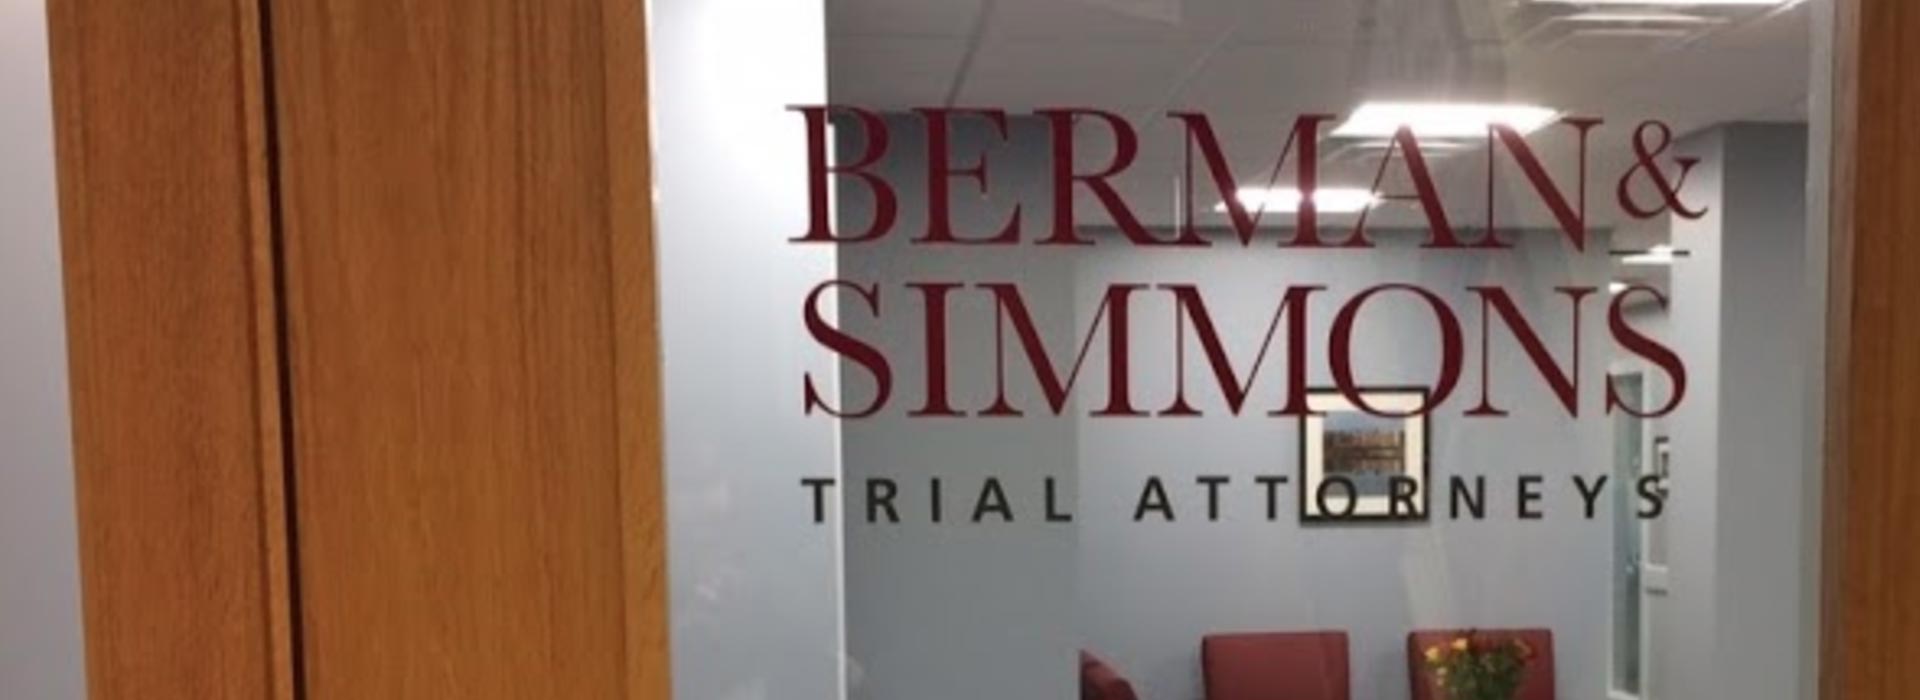 Berman & Simmons Trial Attorneys in